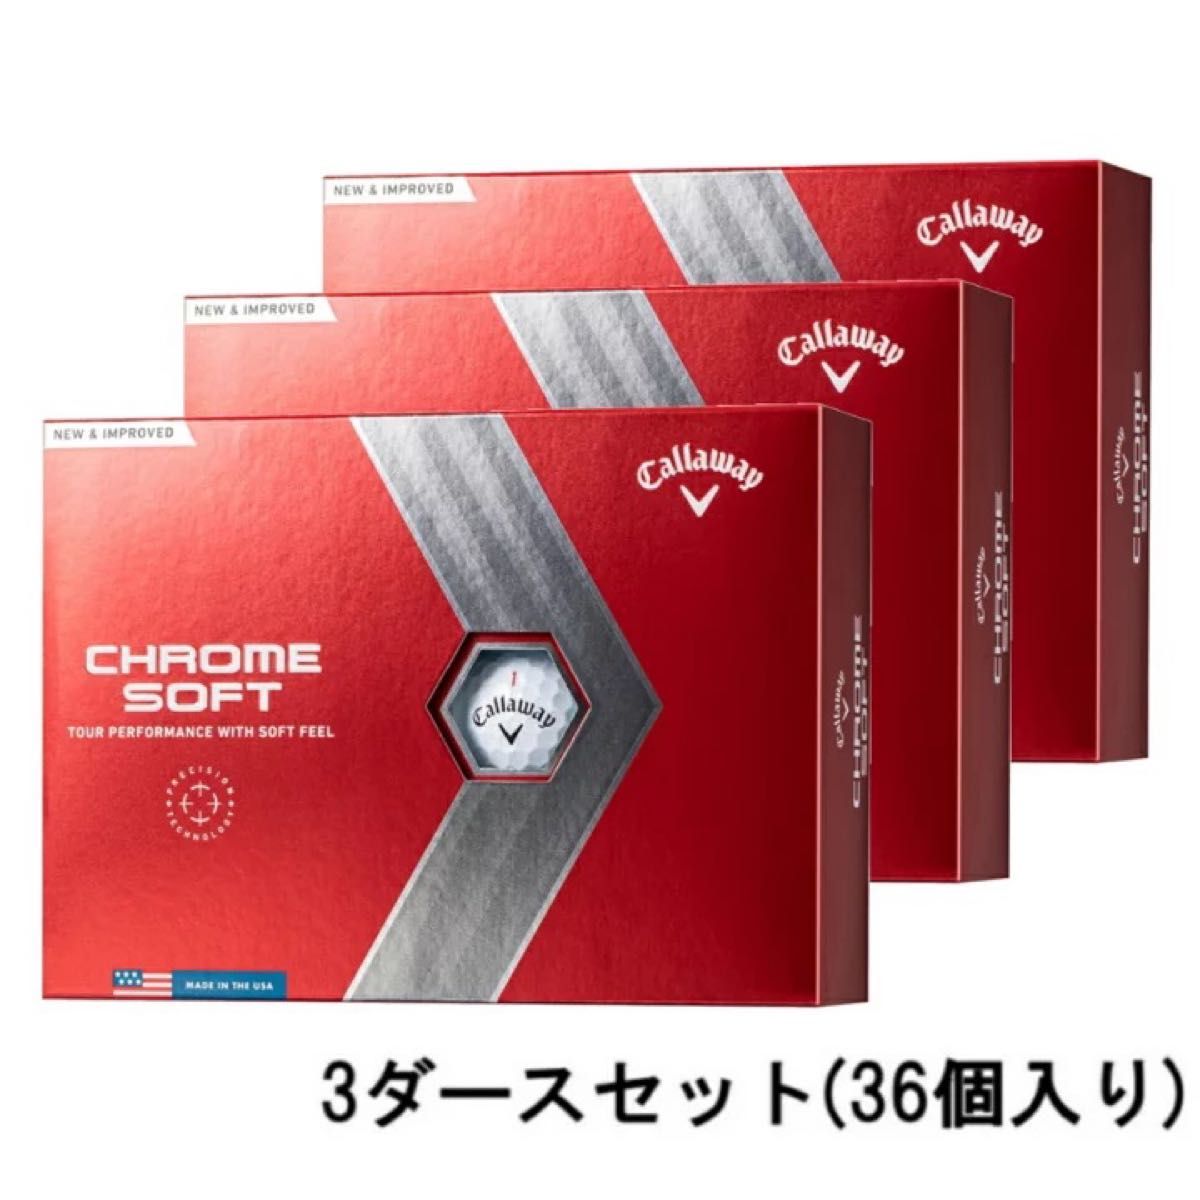 ◆新品◆ CHROME SOFT 3ダース(36球入) 公認球